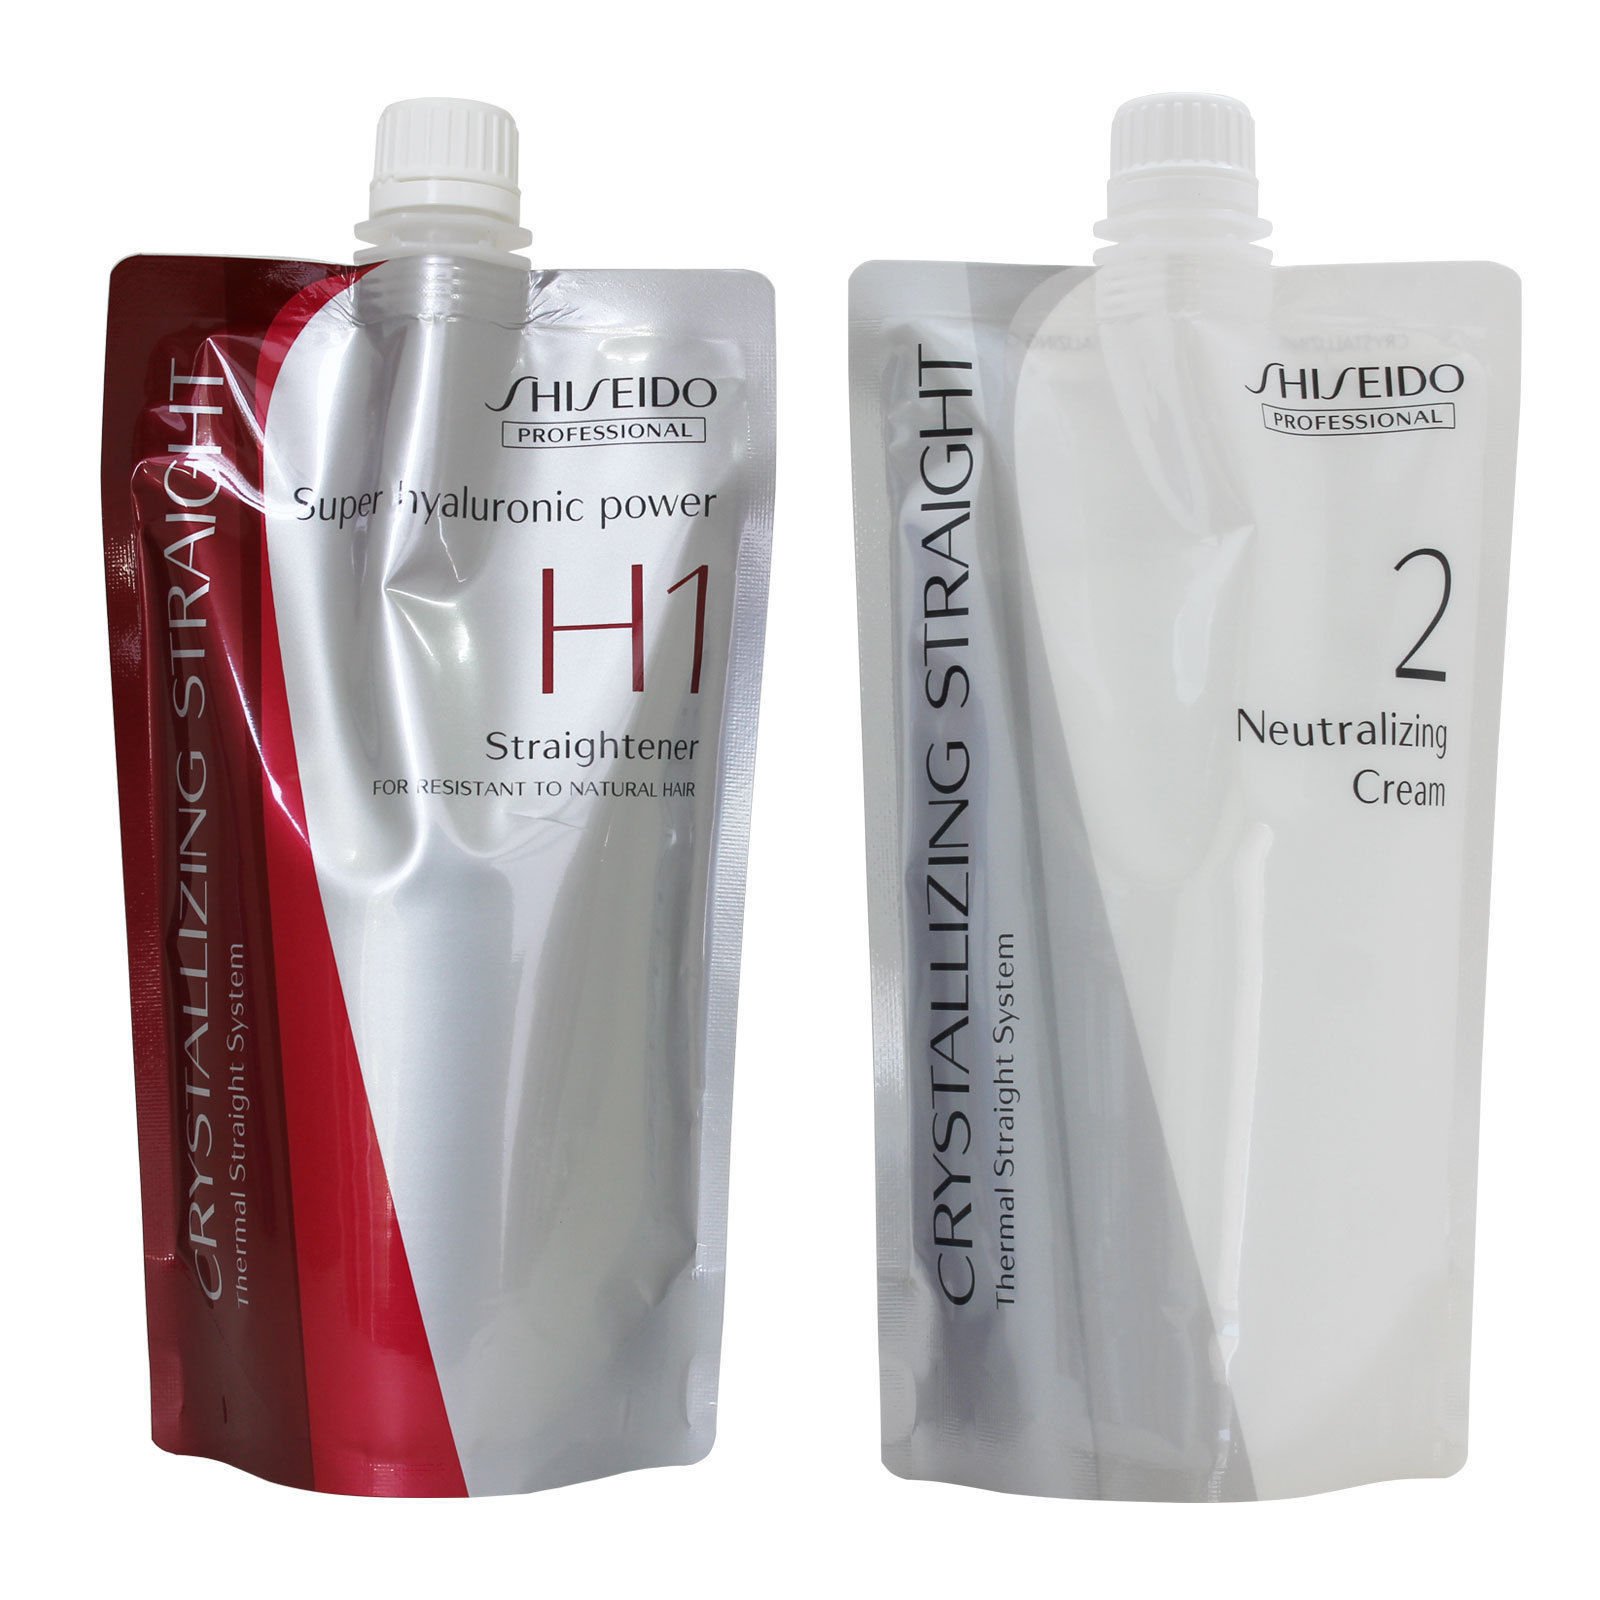 Mua Hair Rebonding Shiseido Professional Crystallizing Hair Straightener  (H1) + Neutralizing Emulsion (2) for Resistant to Natural Hair trên Amazon  Mỹ chính hãng 2023 | Fado